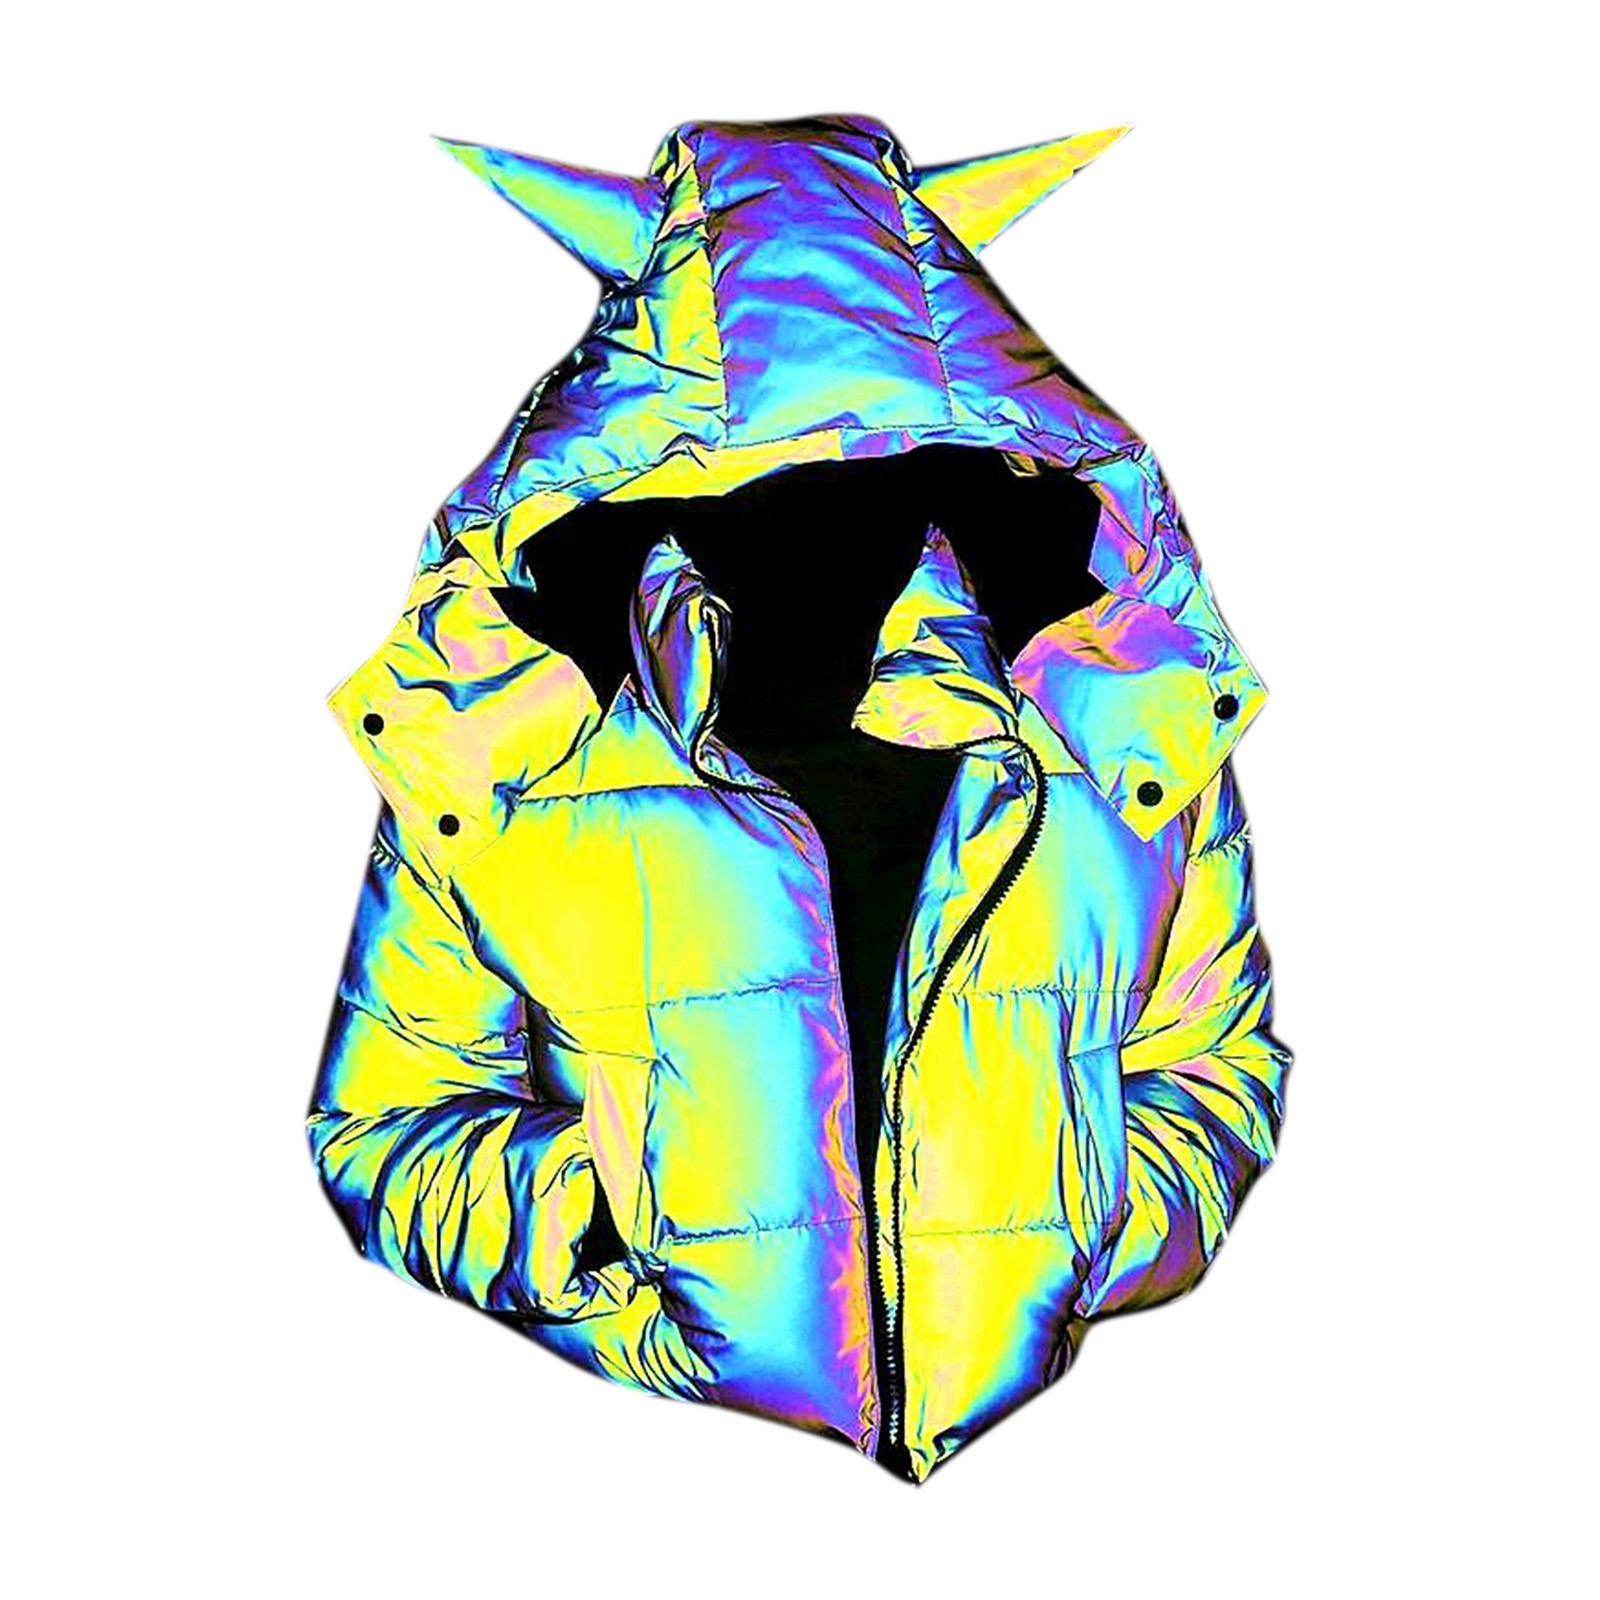 Glow Rainbow Hop Coat Black Reflective Jacket For Women Detachable Hooded Zipper Warm Short Coat With Pockets - image 2 of 9